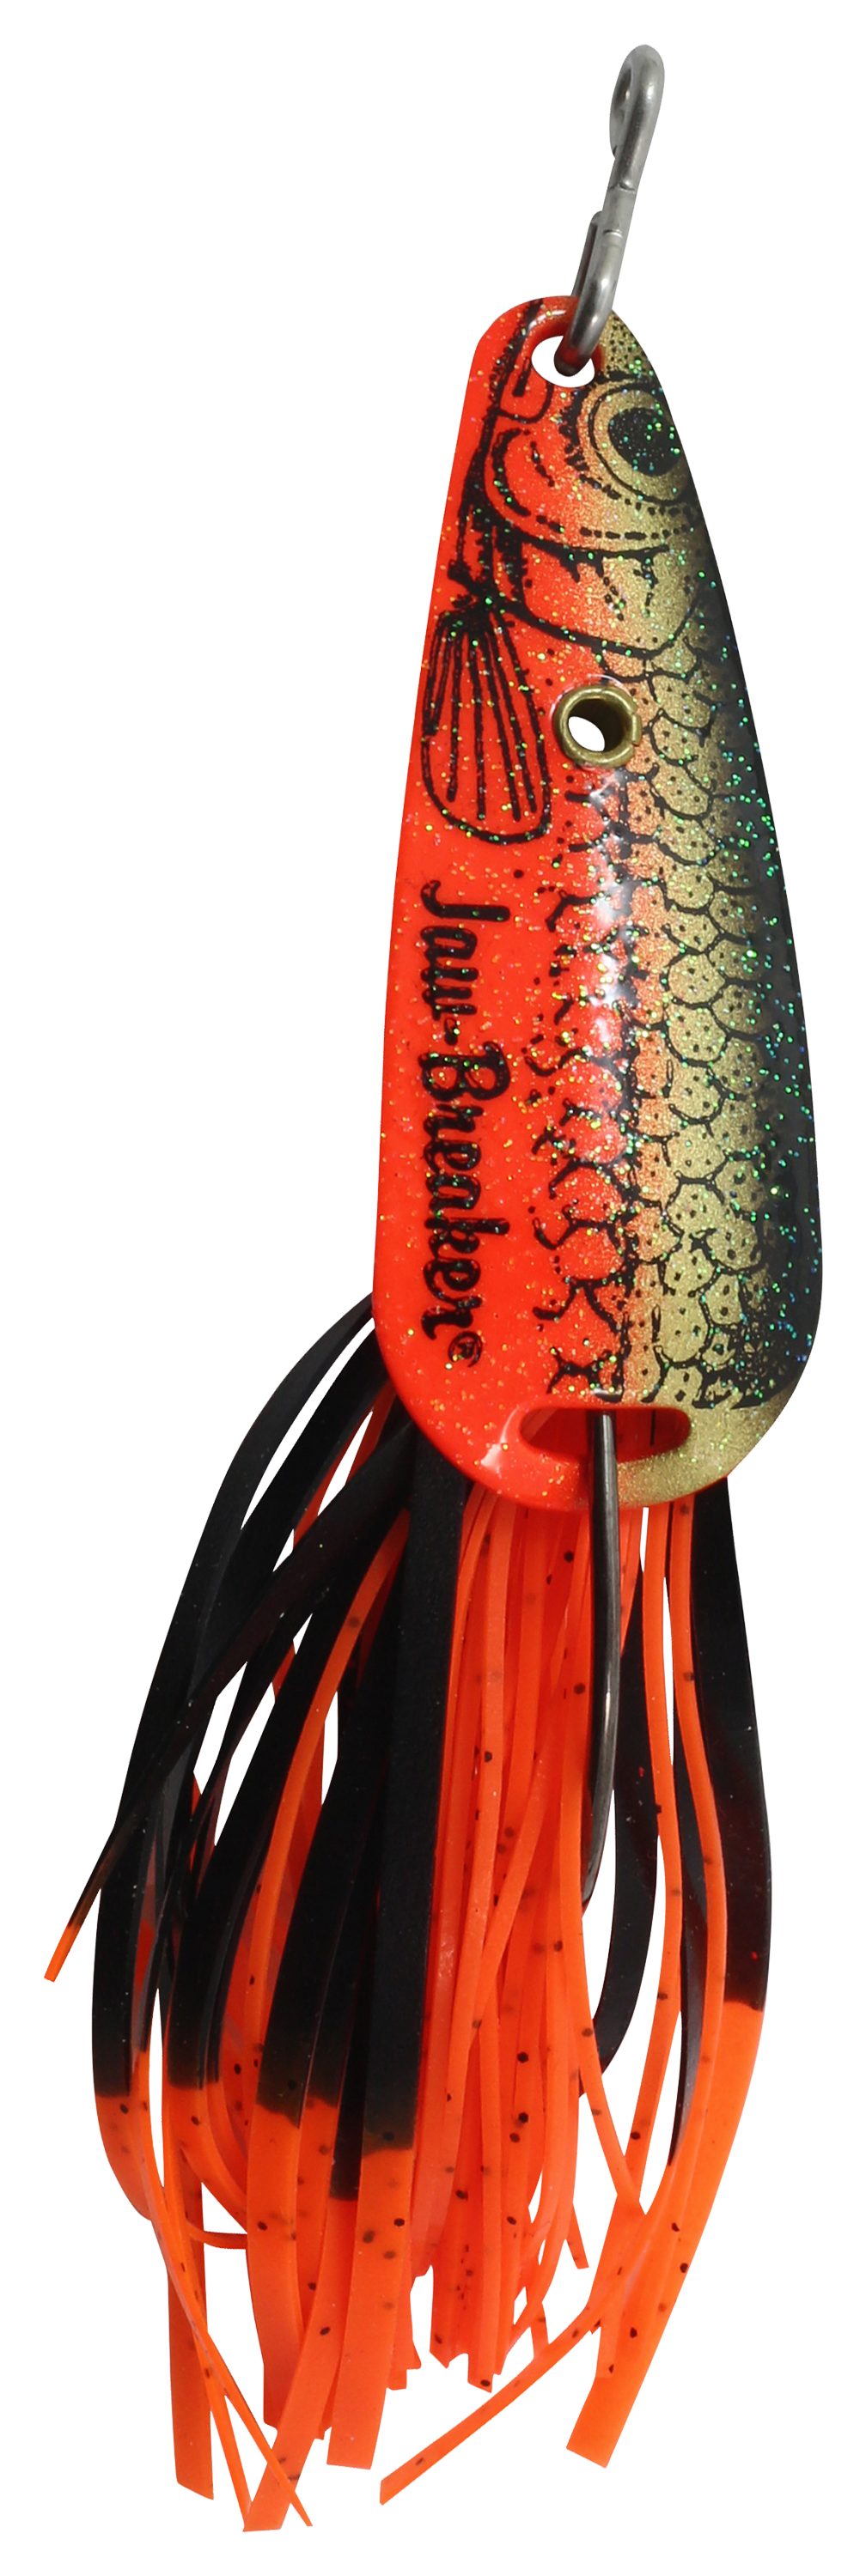 Northland Jaw-Breaker Spoon - Crawfish